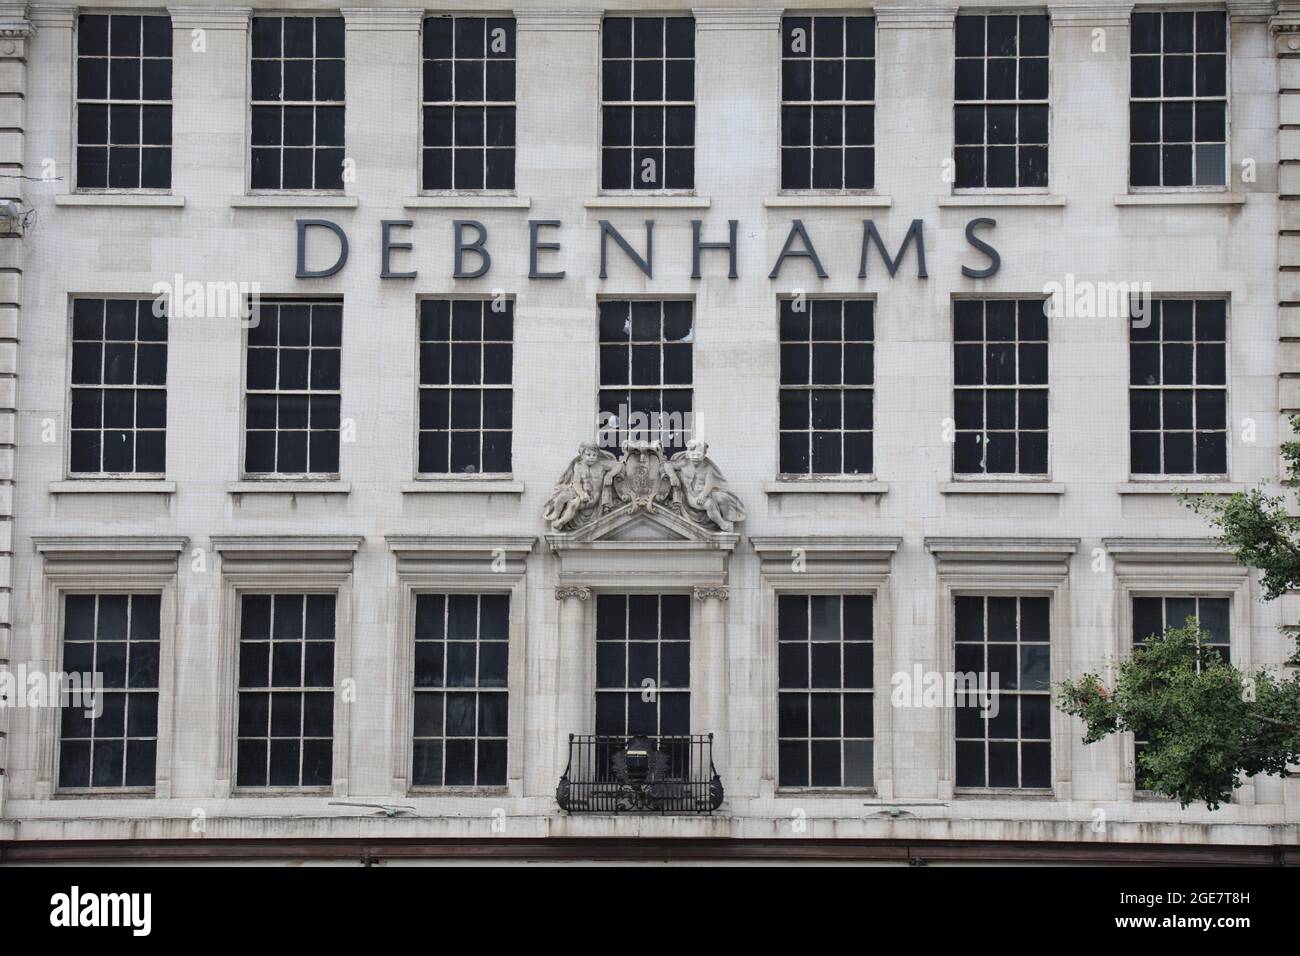 Debenhams department store in Nottingham Stock Photo